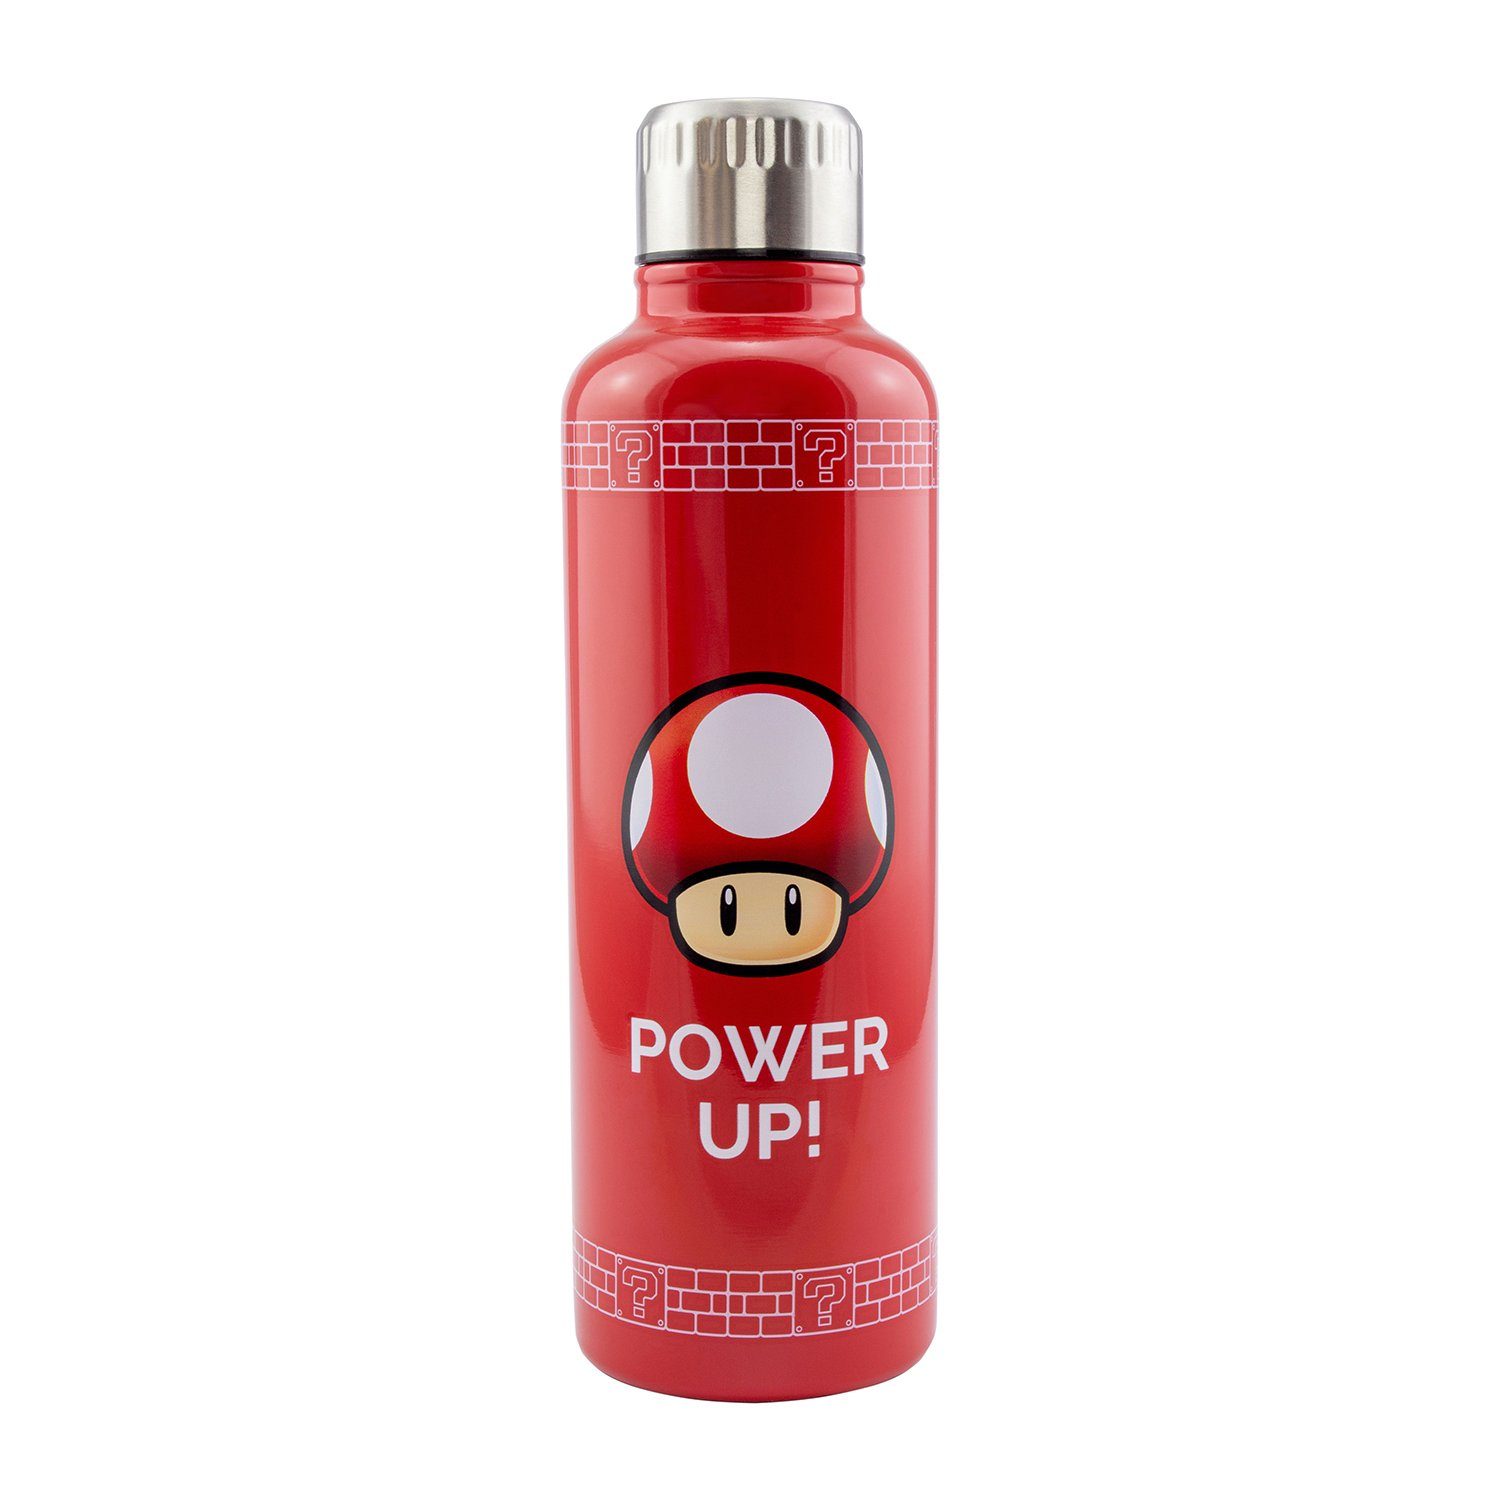 Up! Super flasche Backform Paladone Power Metall Mario Trink